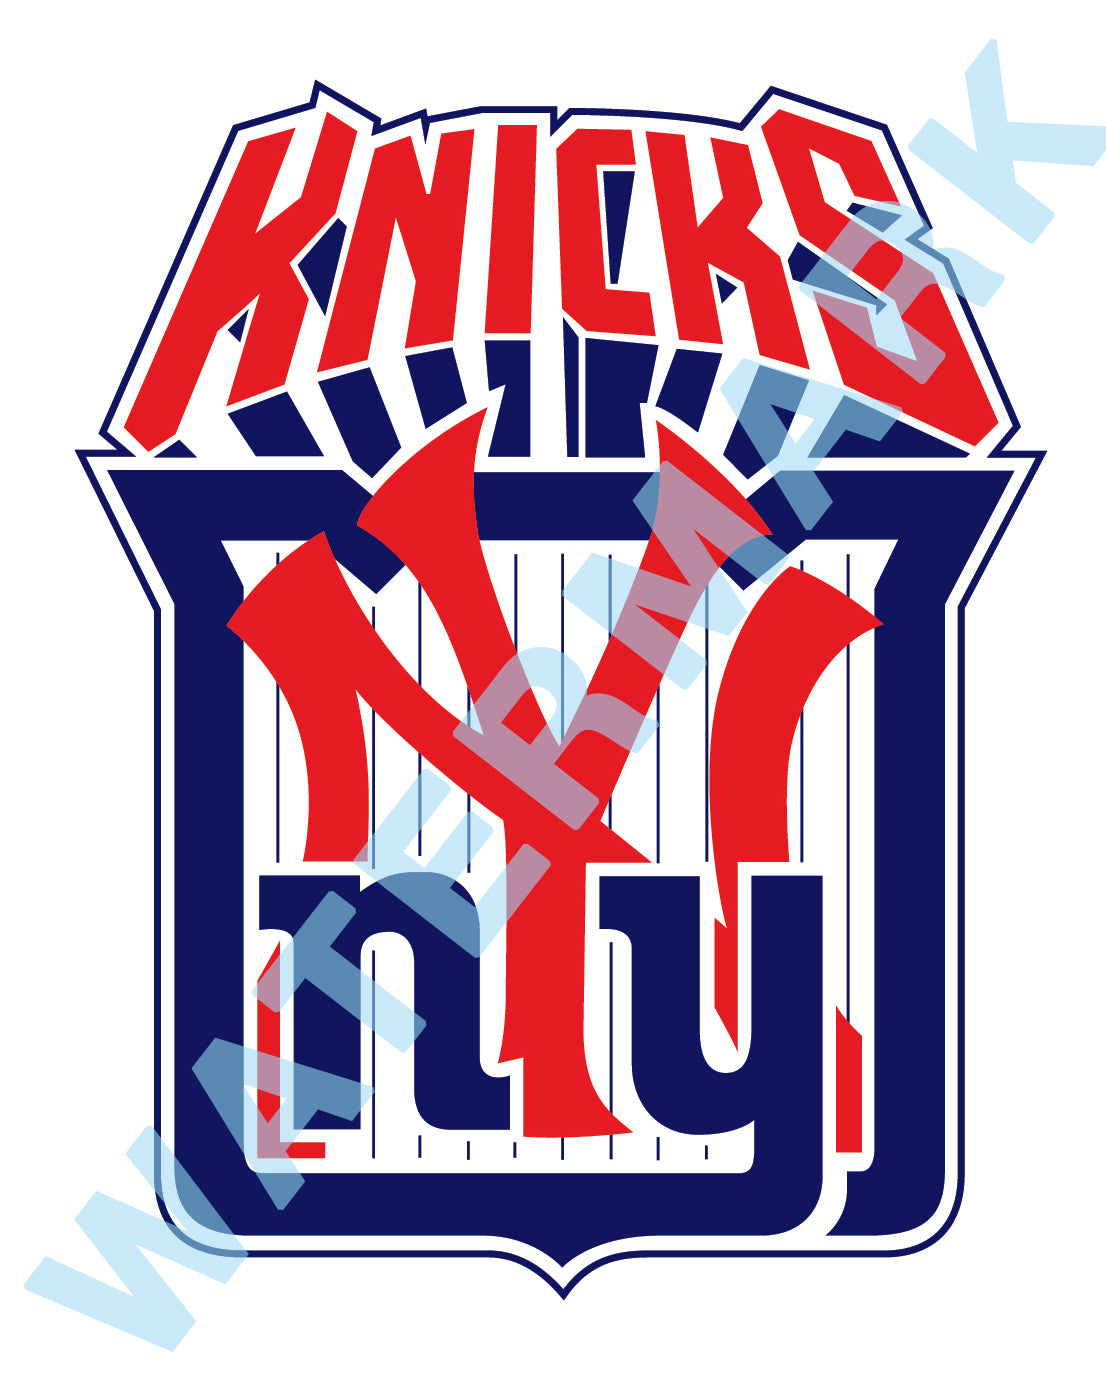 New York Yankees Giants Knicks MASH UP Logo T-shirt 6 Sizes S-3XL